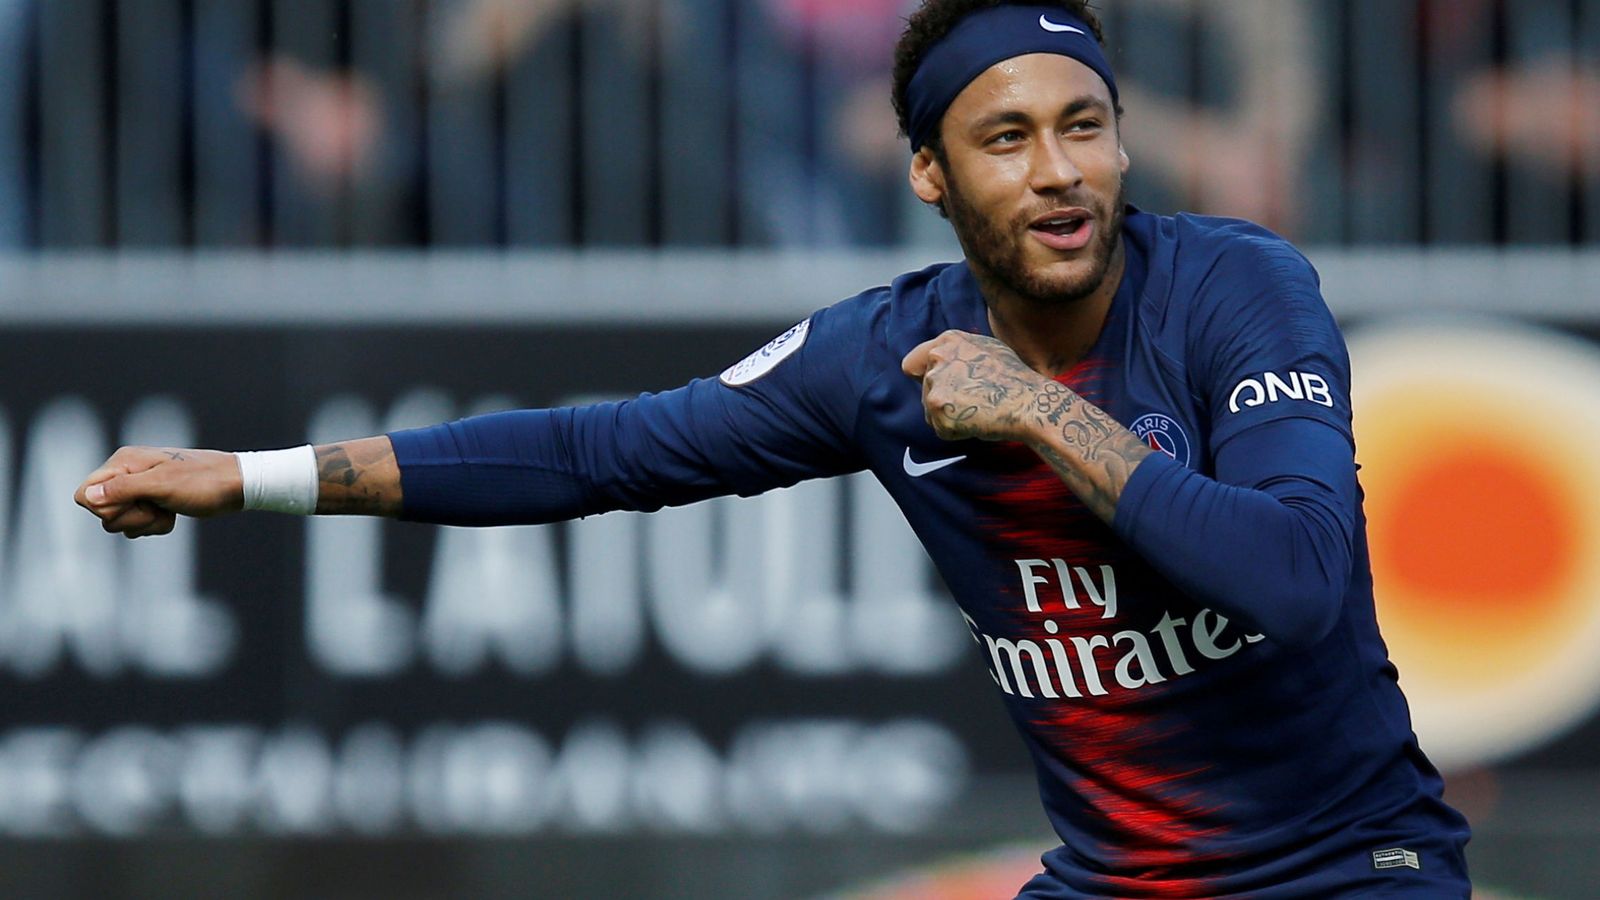 Foto: Neymar celebra un gol con la camiseta del PSG. (Reuters)